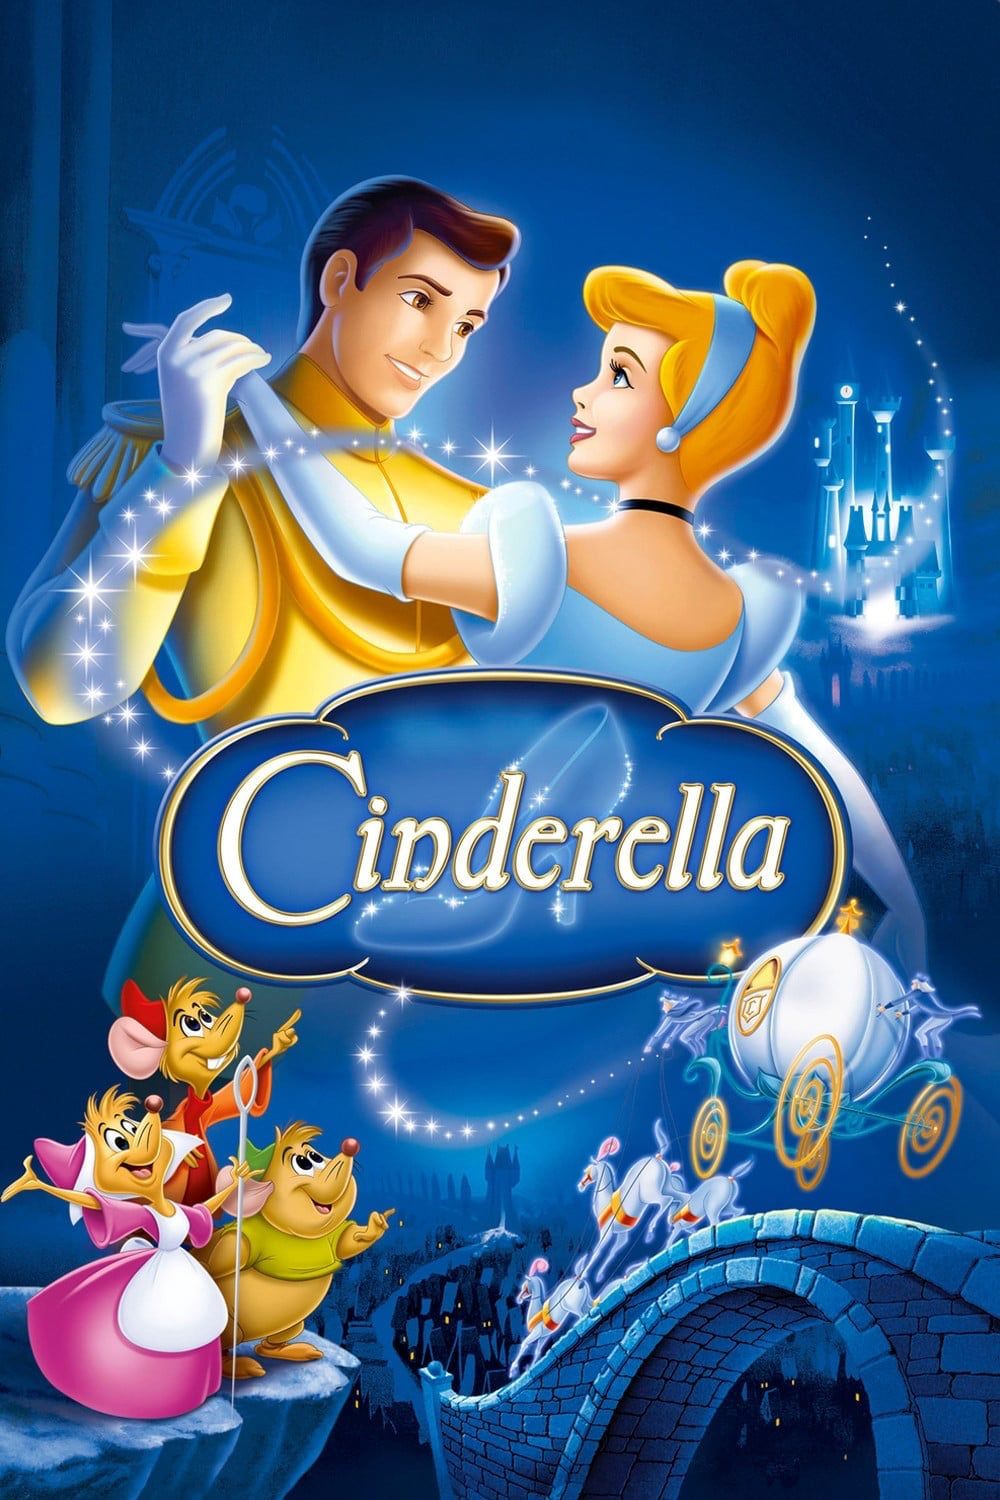 Cinderella 1950 Disney Movie Poster